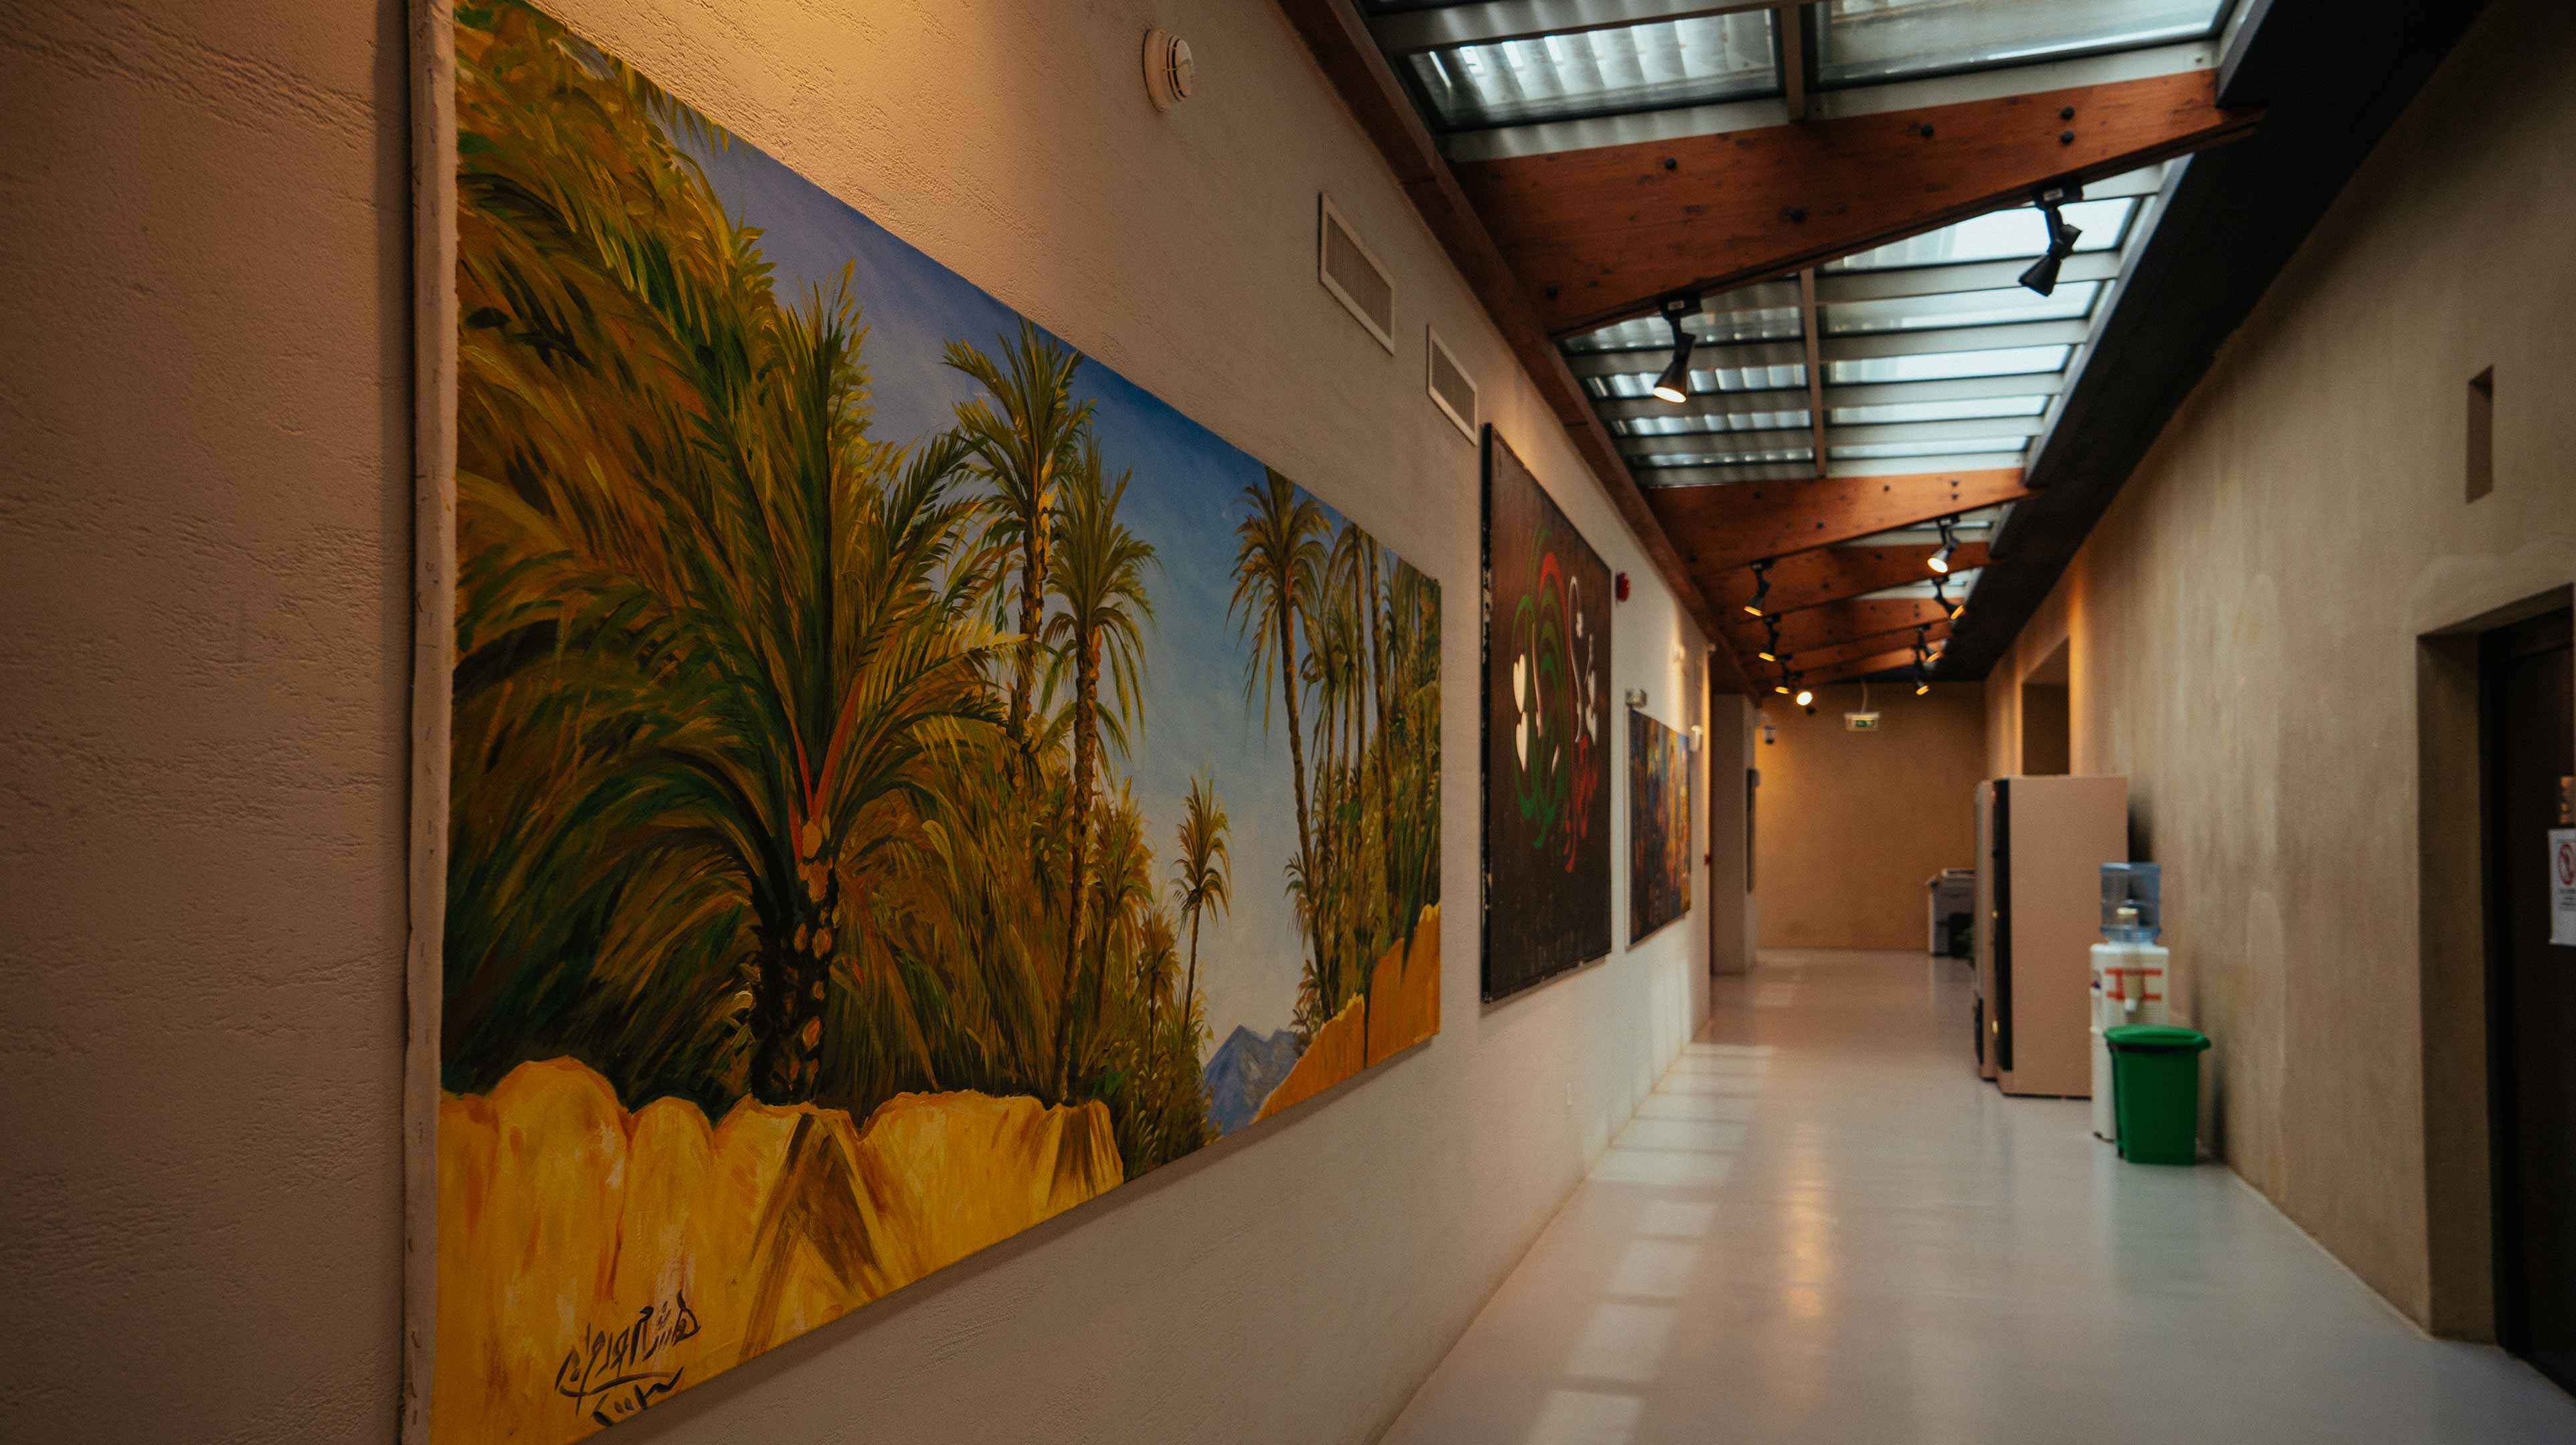 A painting of palm trees at Al Qattara Arts Centre